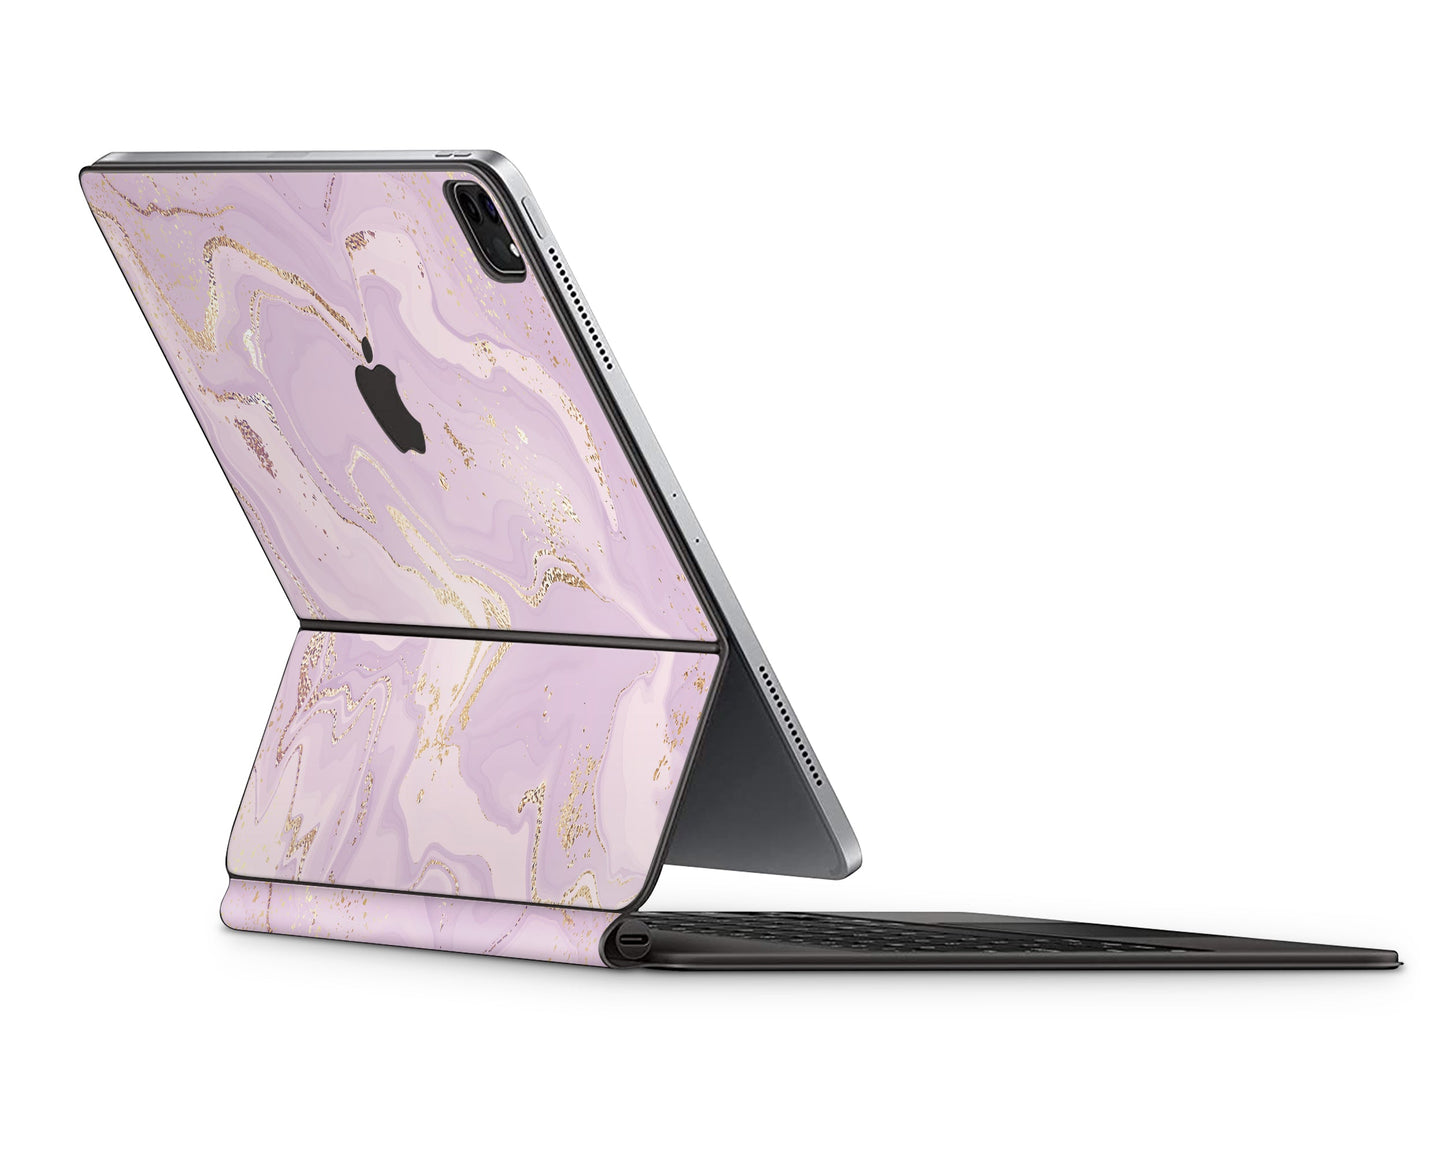 Lux Skins Magic Keyboard Ethereal Lavender Marble iPad Pro 11" Skins - Pattern Marble Skin